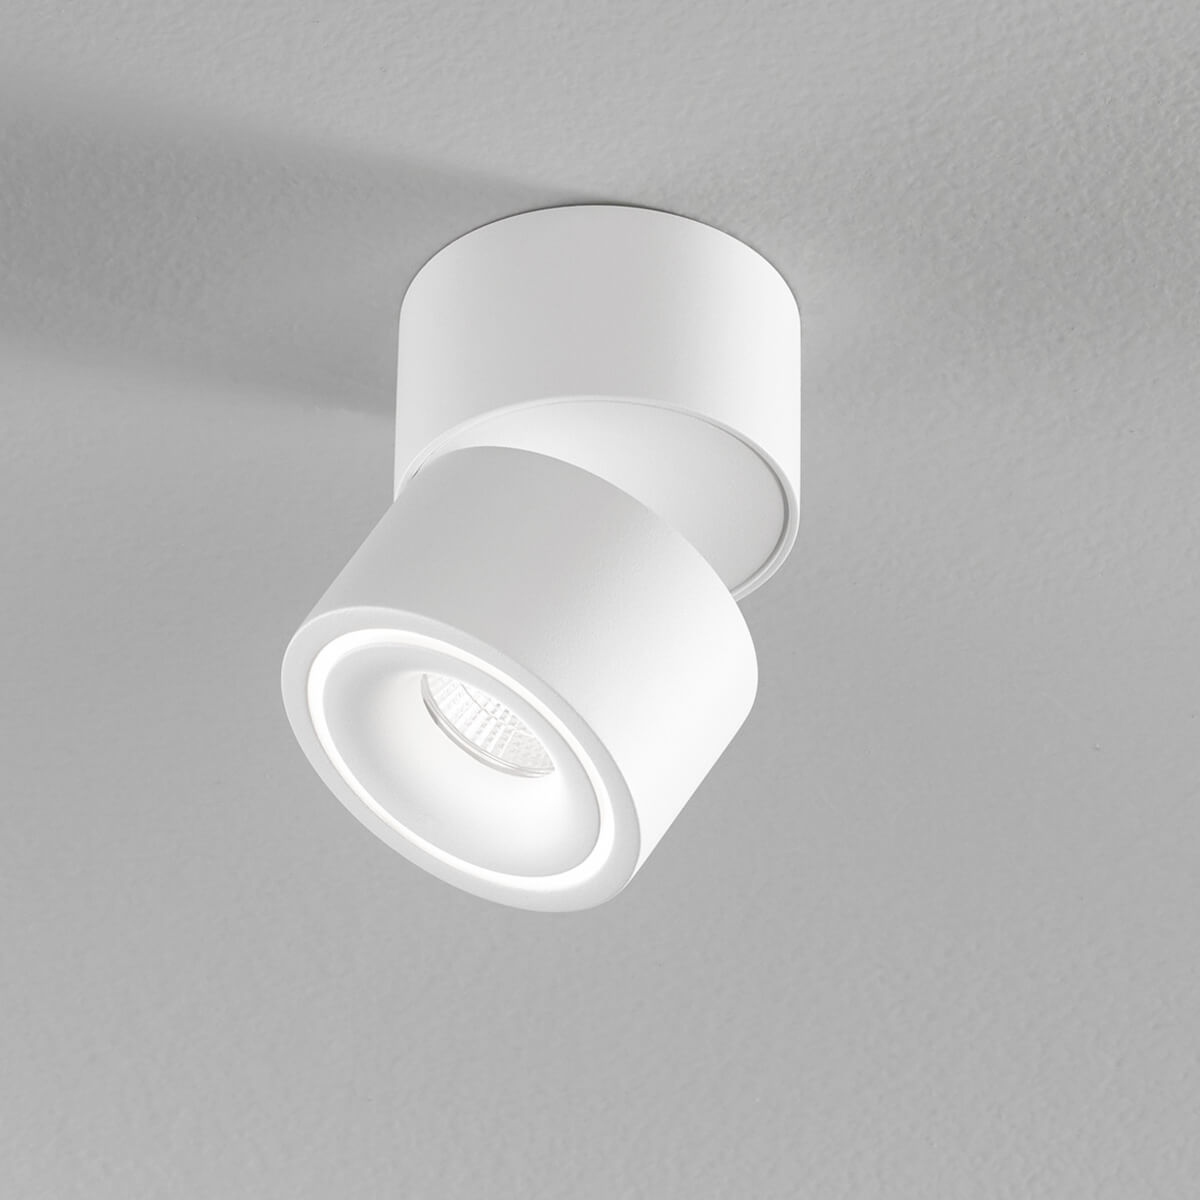 Egger Licht Clippo LED Wand- / Deckenstrahler, Dim-to-Warm